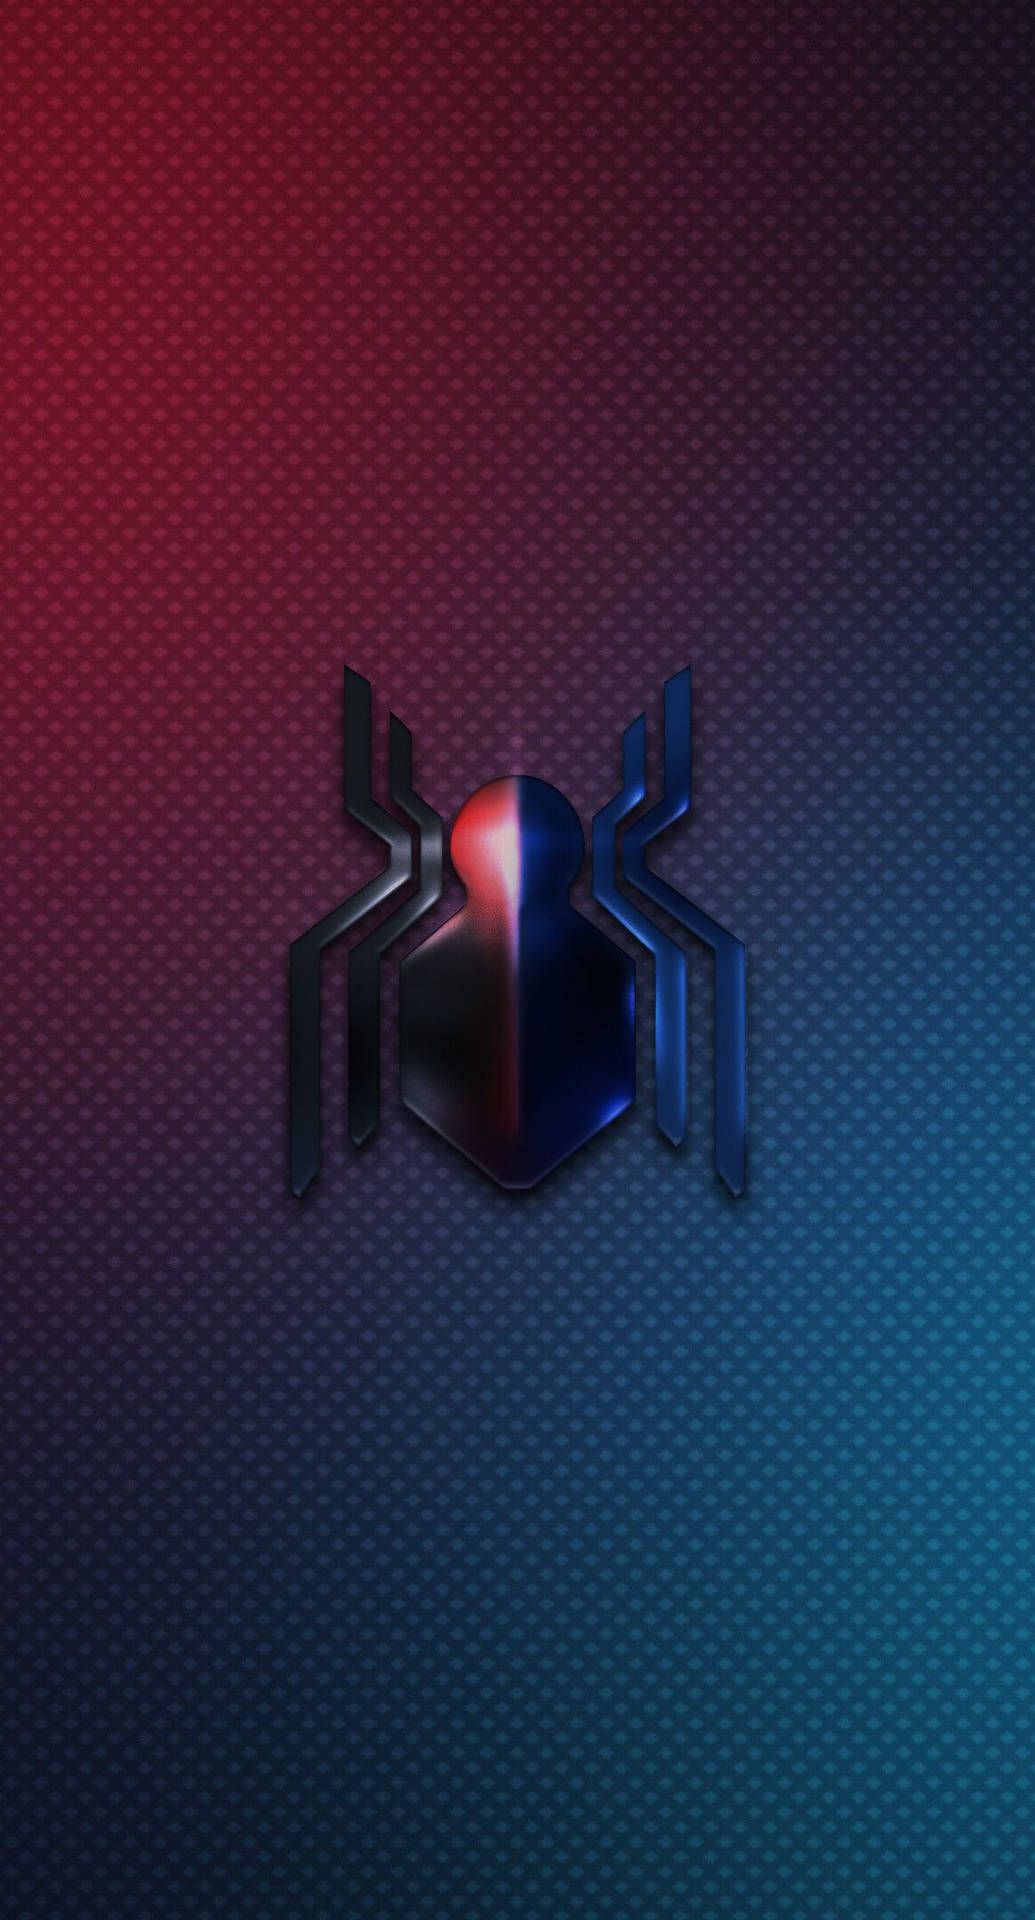 Spiderman Iconic Symbol Background